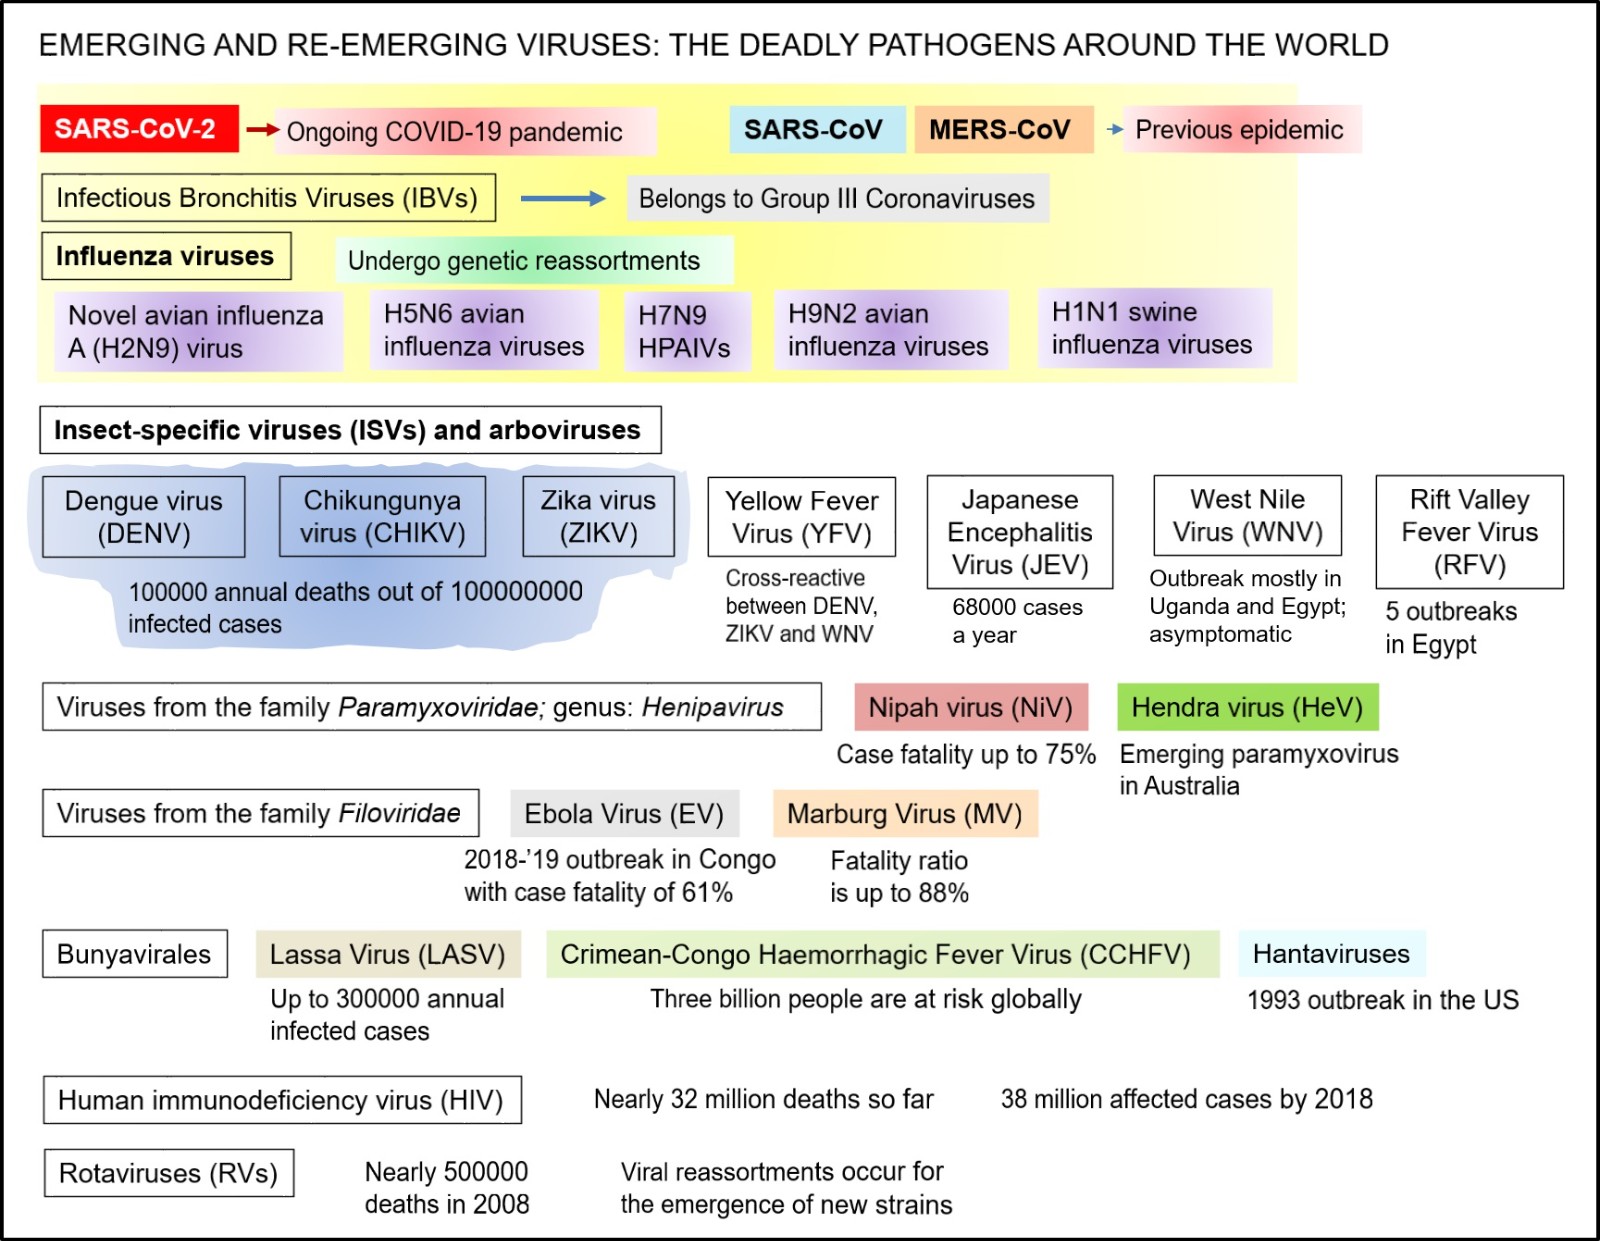 Emerging Viruses Besides the Severe Acute Respiratory Syndrome Coronavirus 2 (SARS-CoV-2)